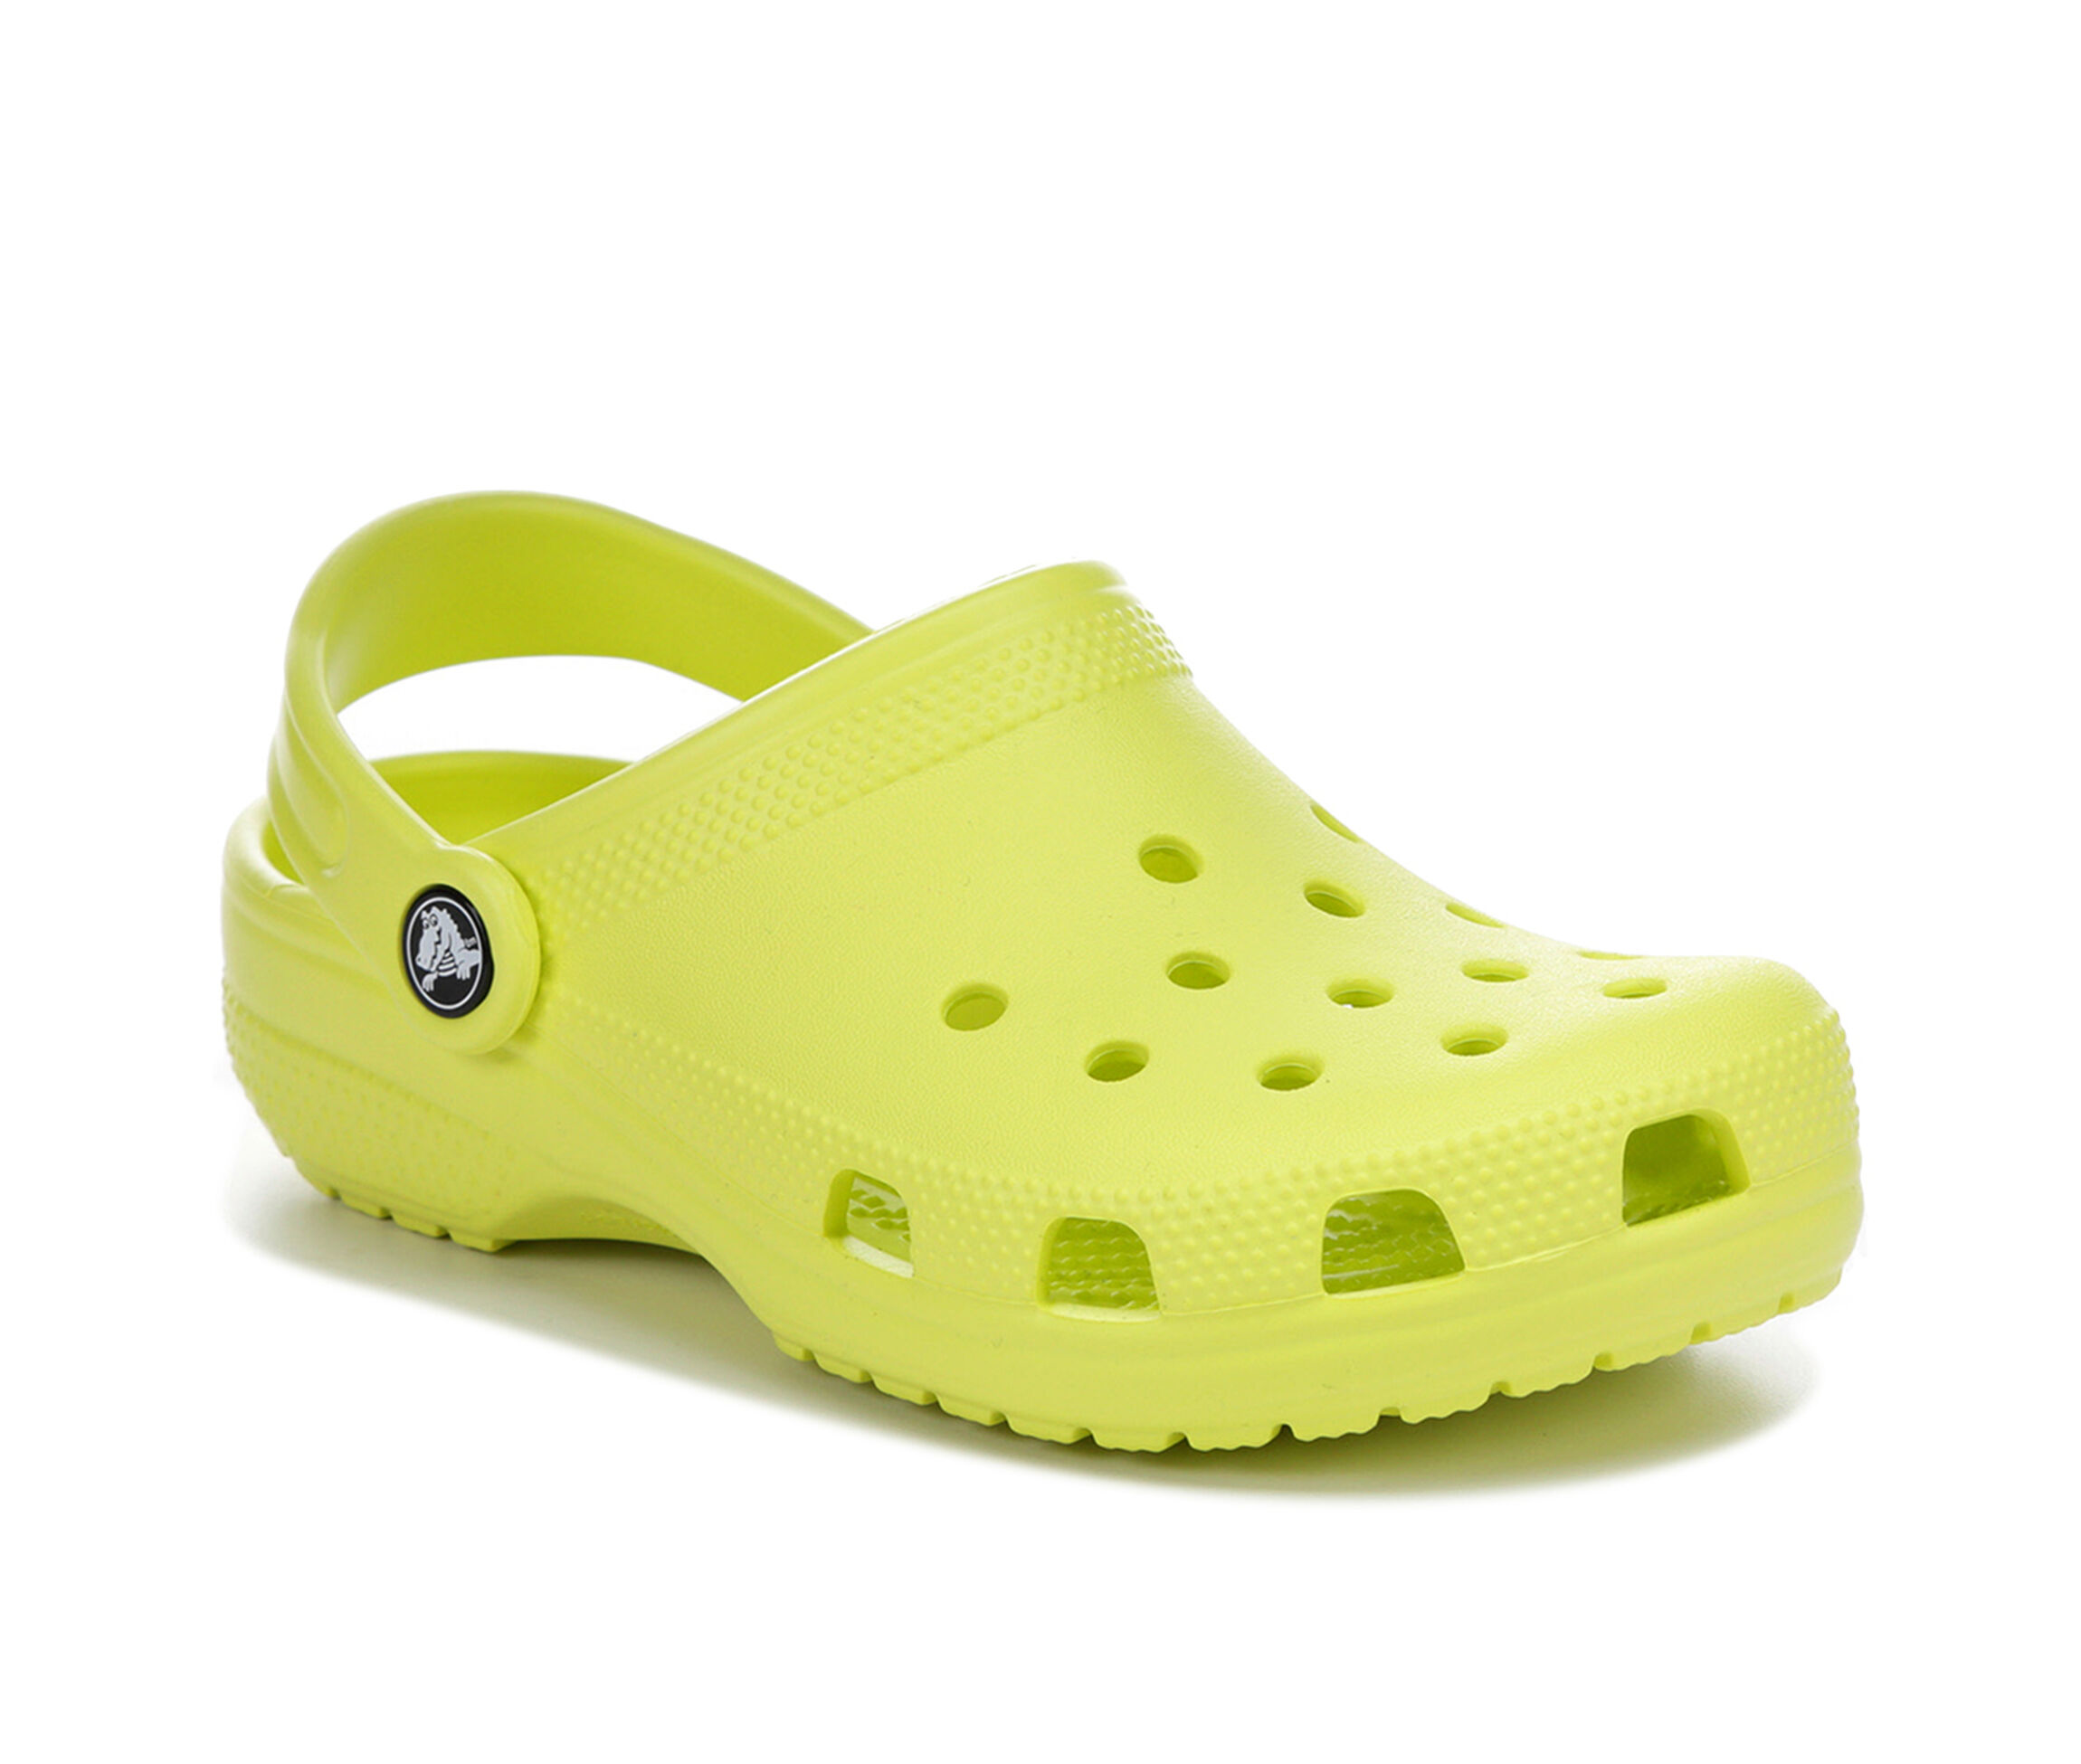 kids yellow crocs sandals size 11 barely used indoor shoe 